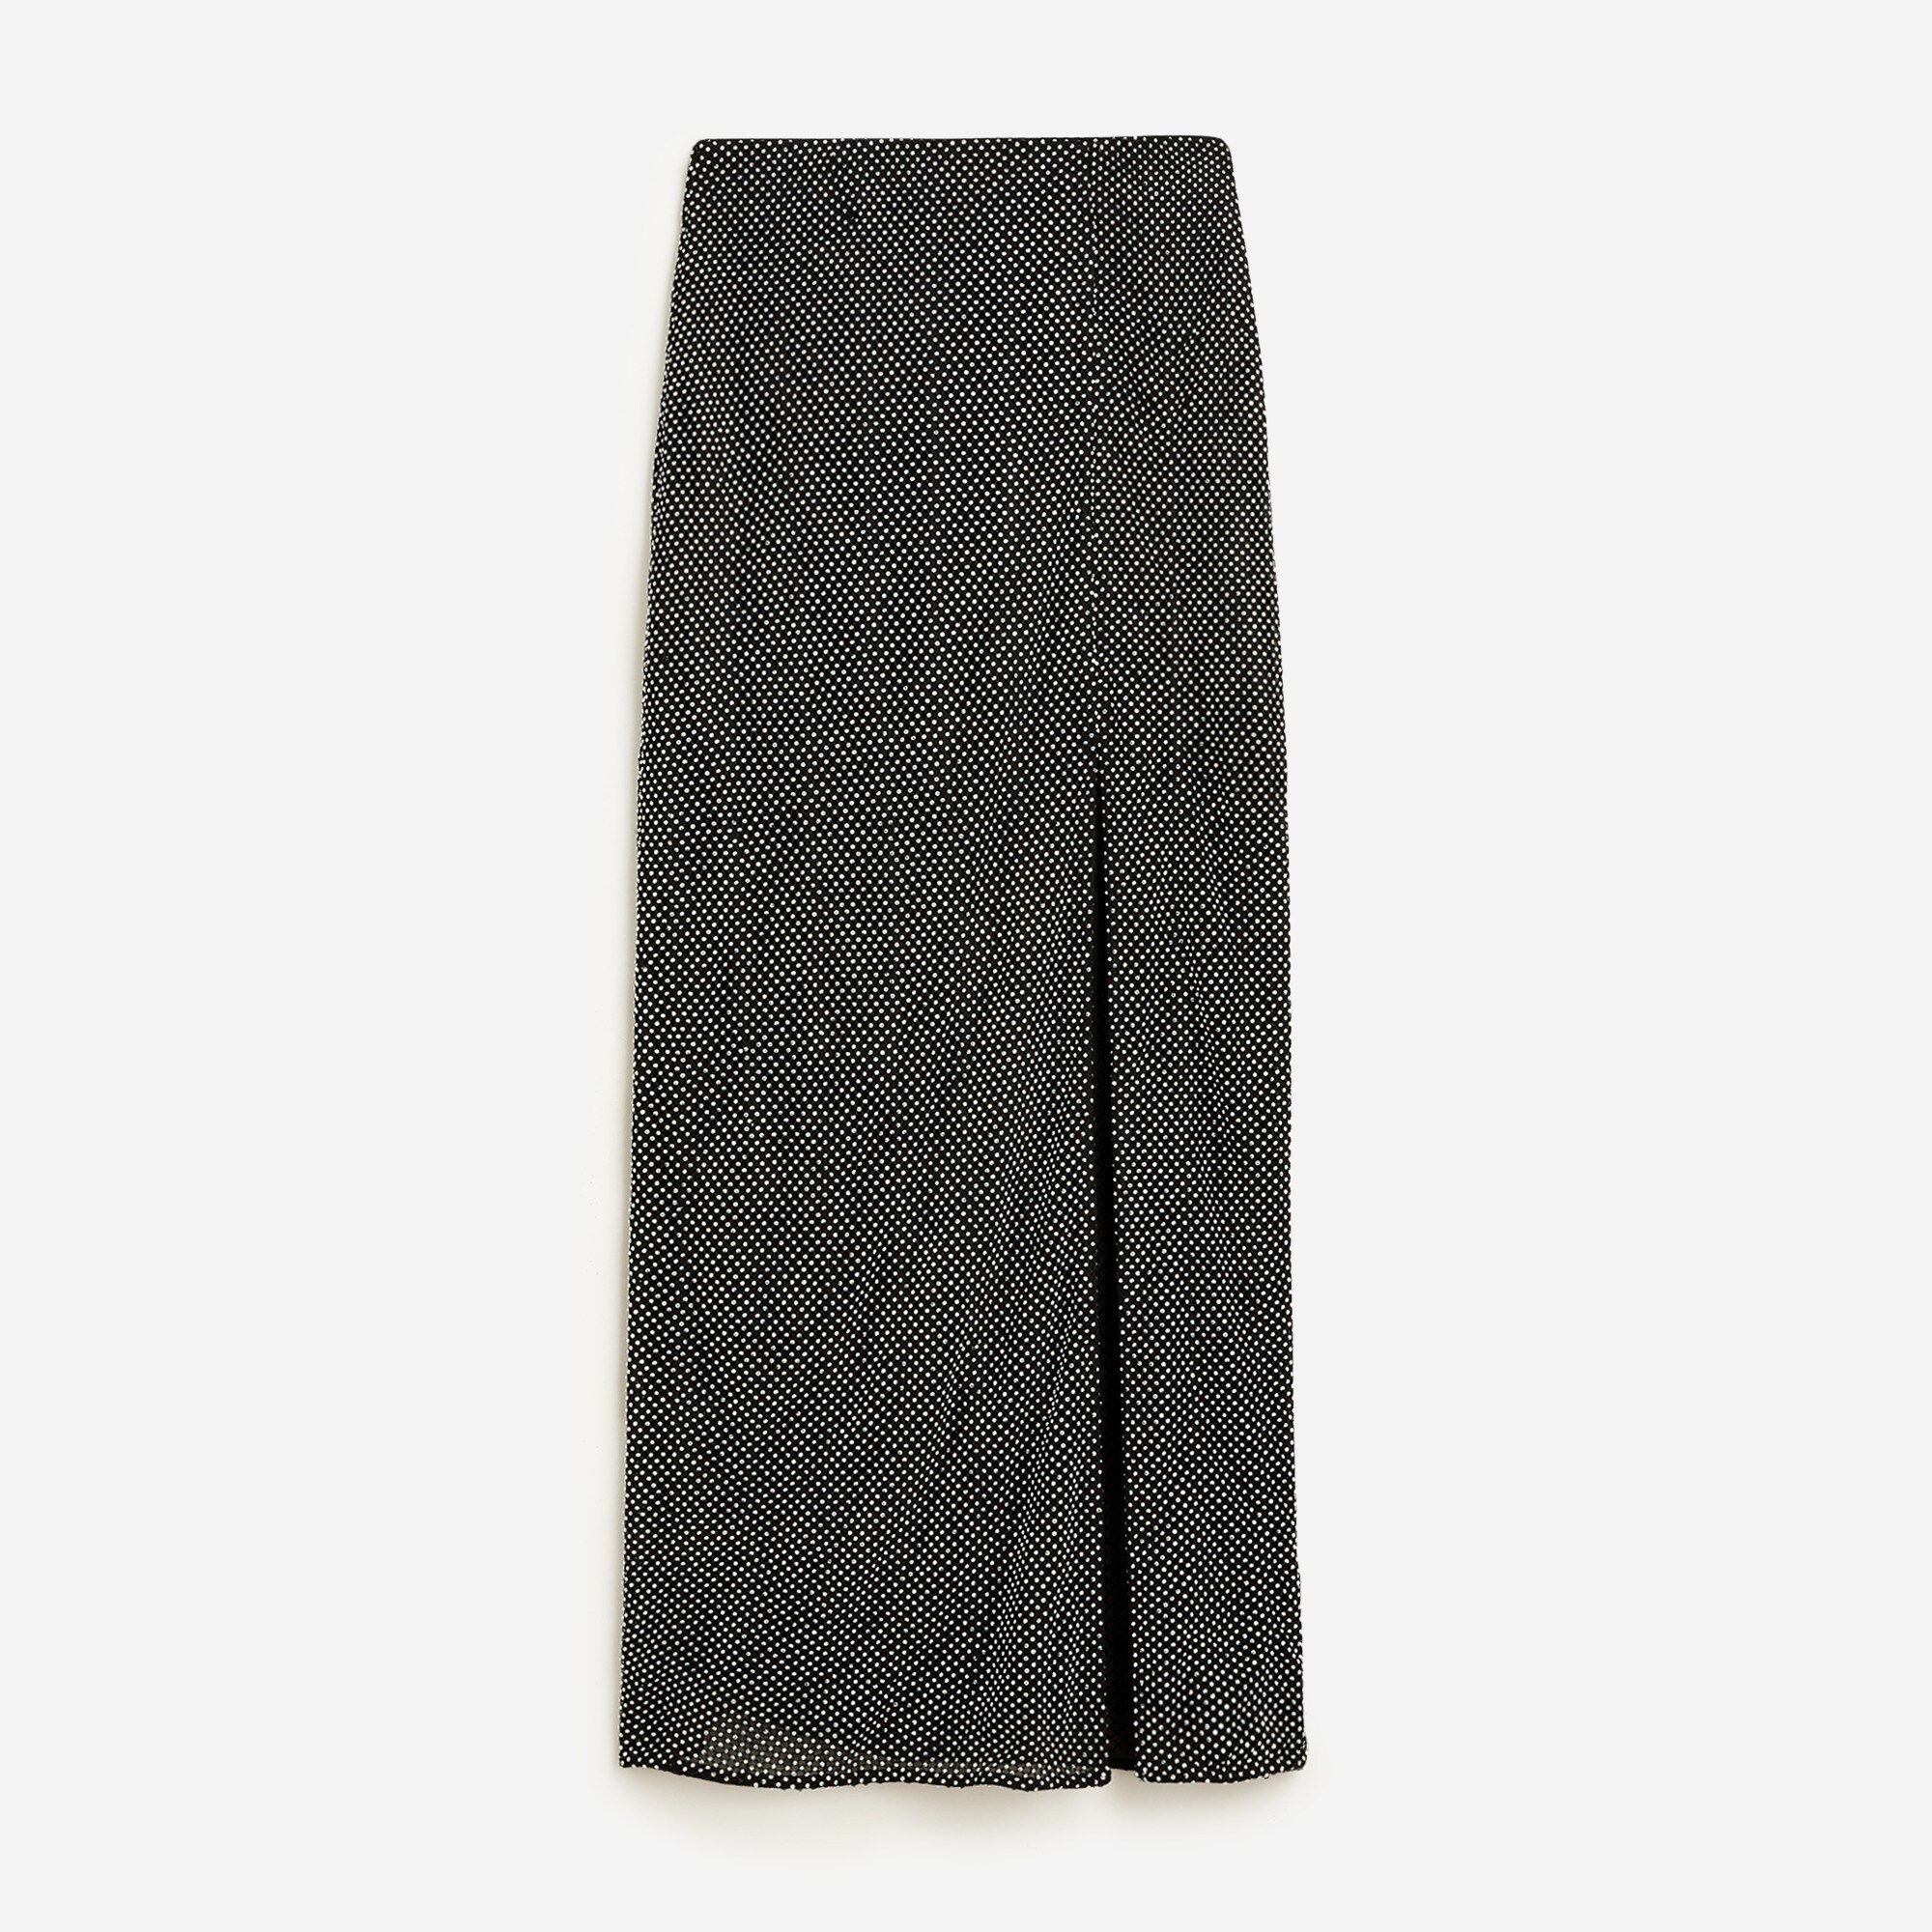  Collection side-slit rhinestone skirt